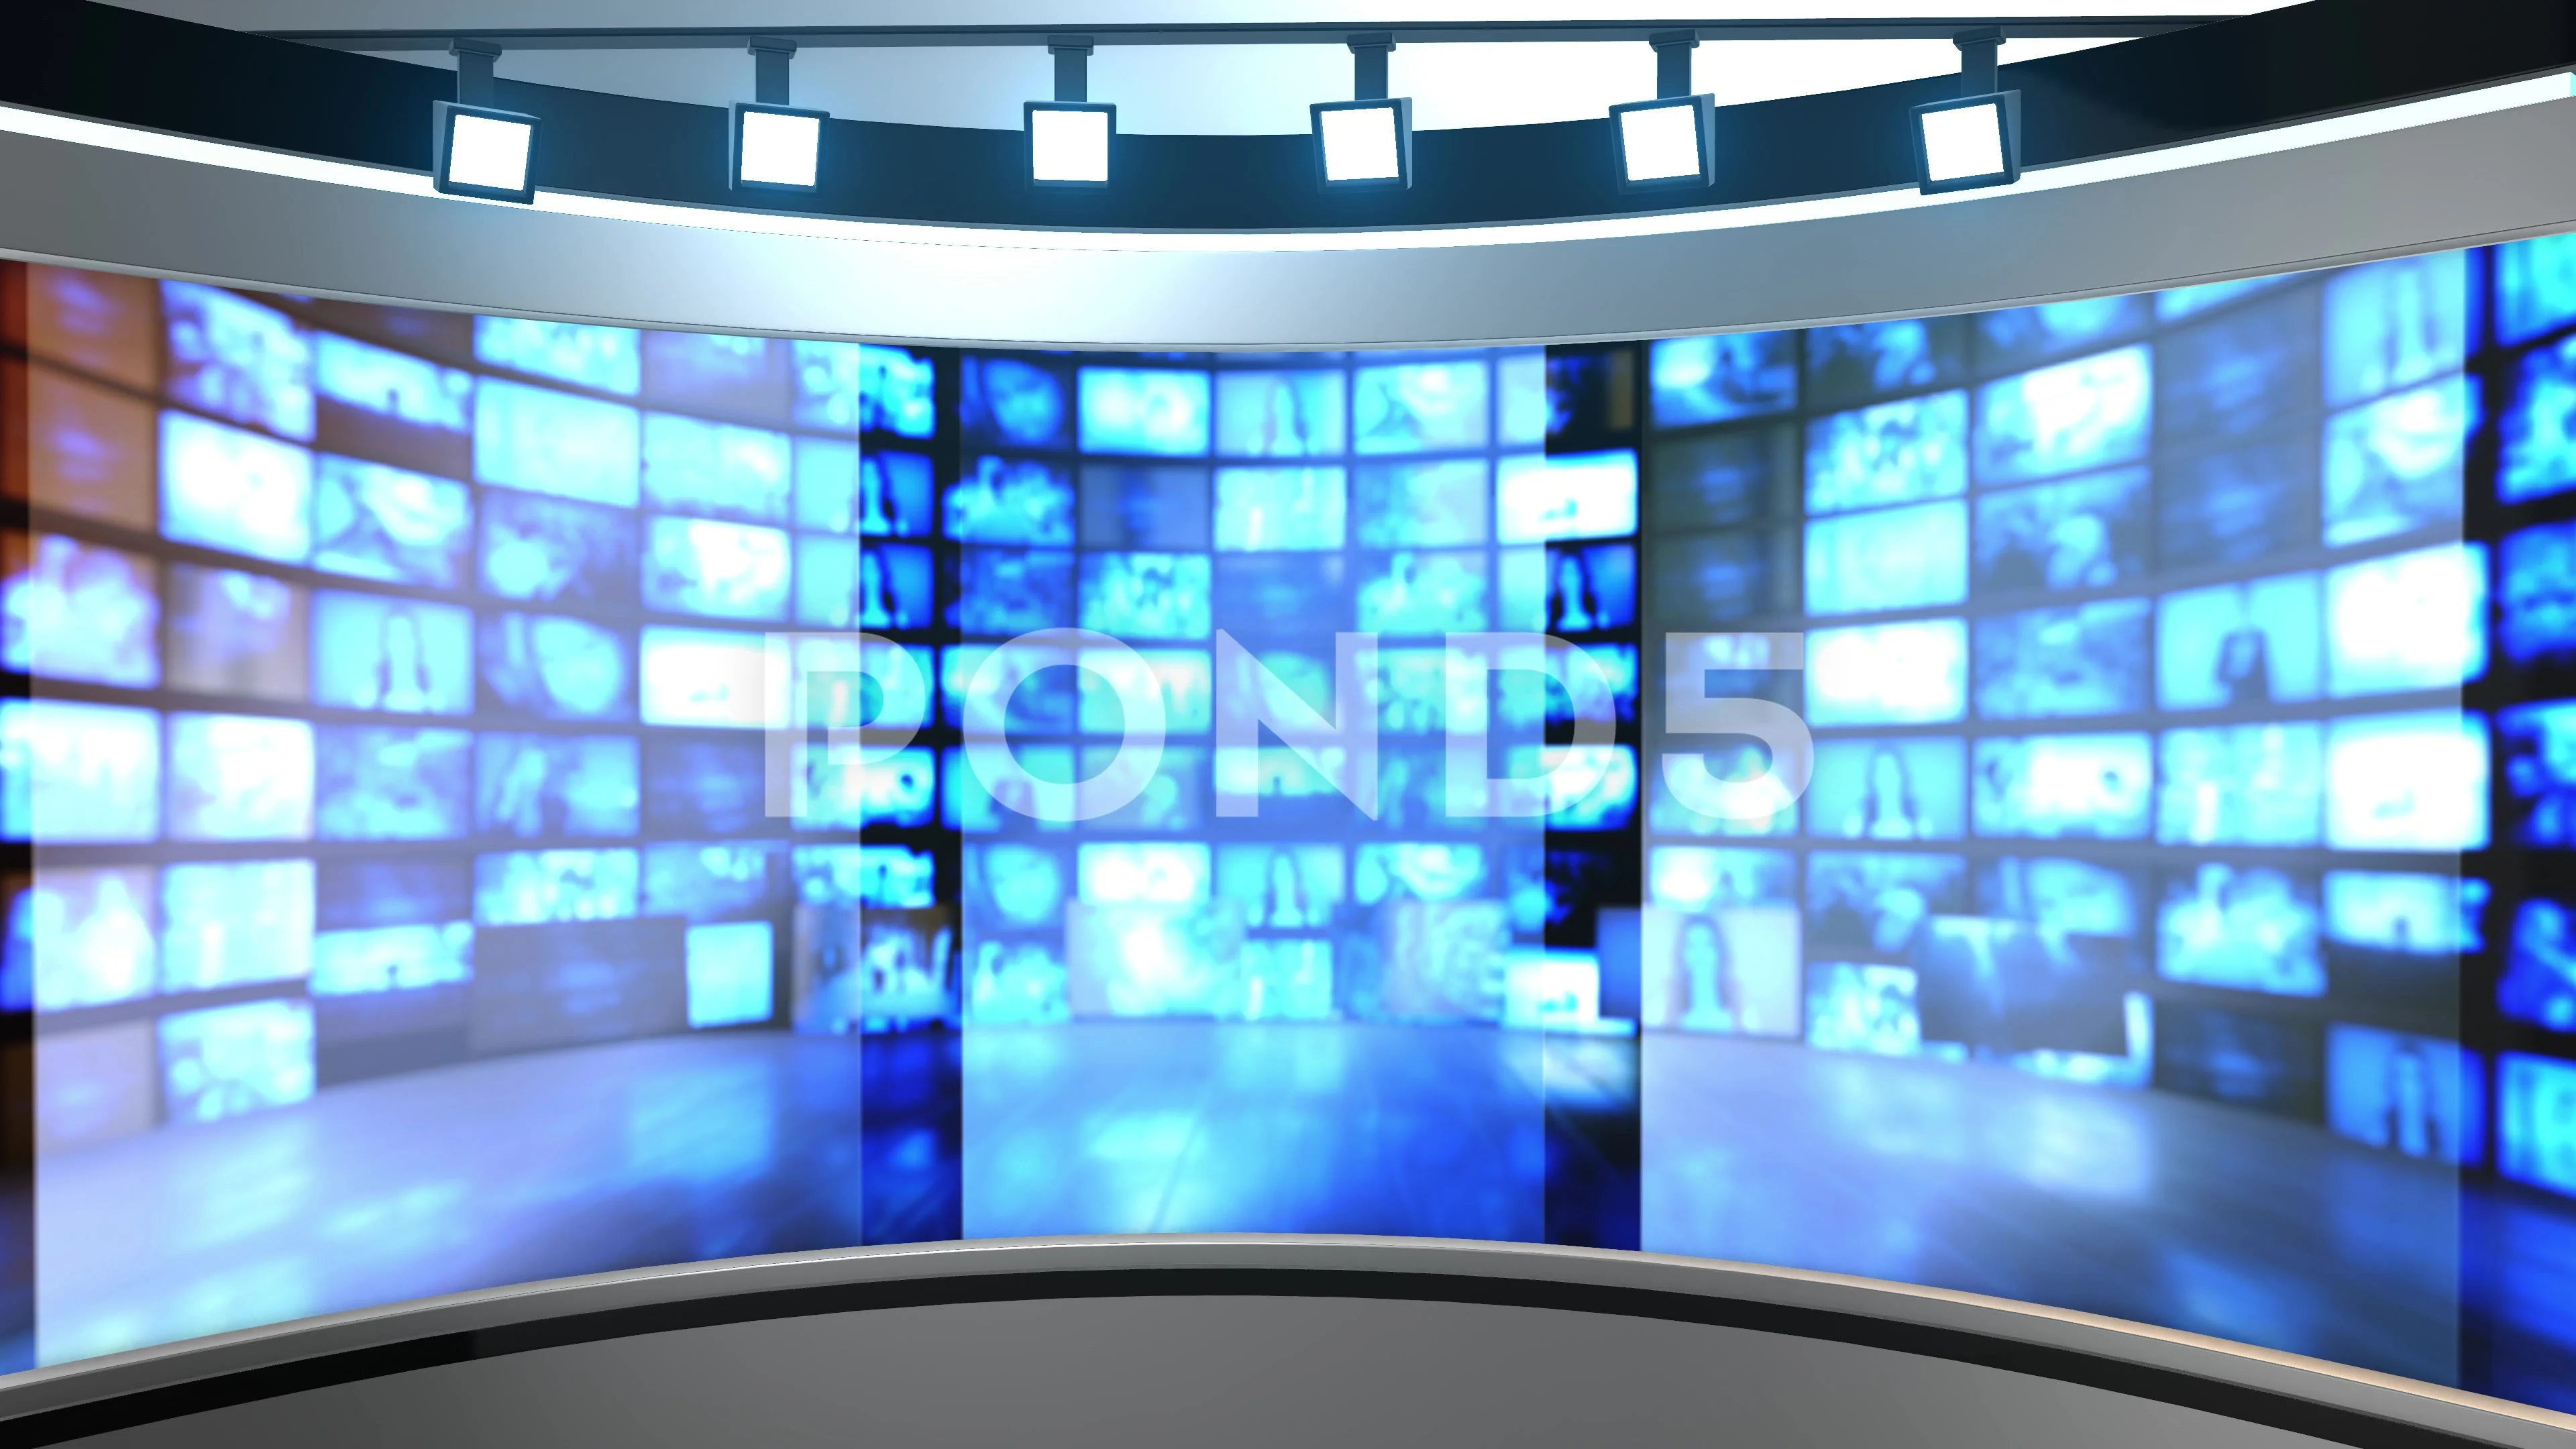 News TV Studio Set - Virtual Green Scree, Stock Video, Pond5